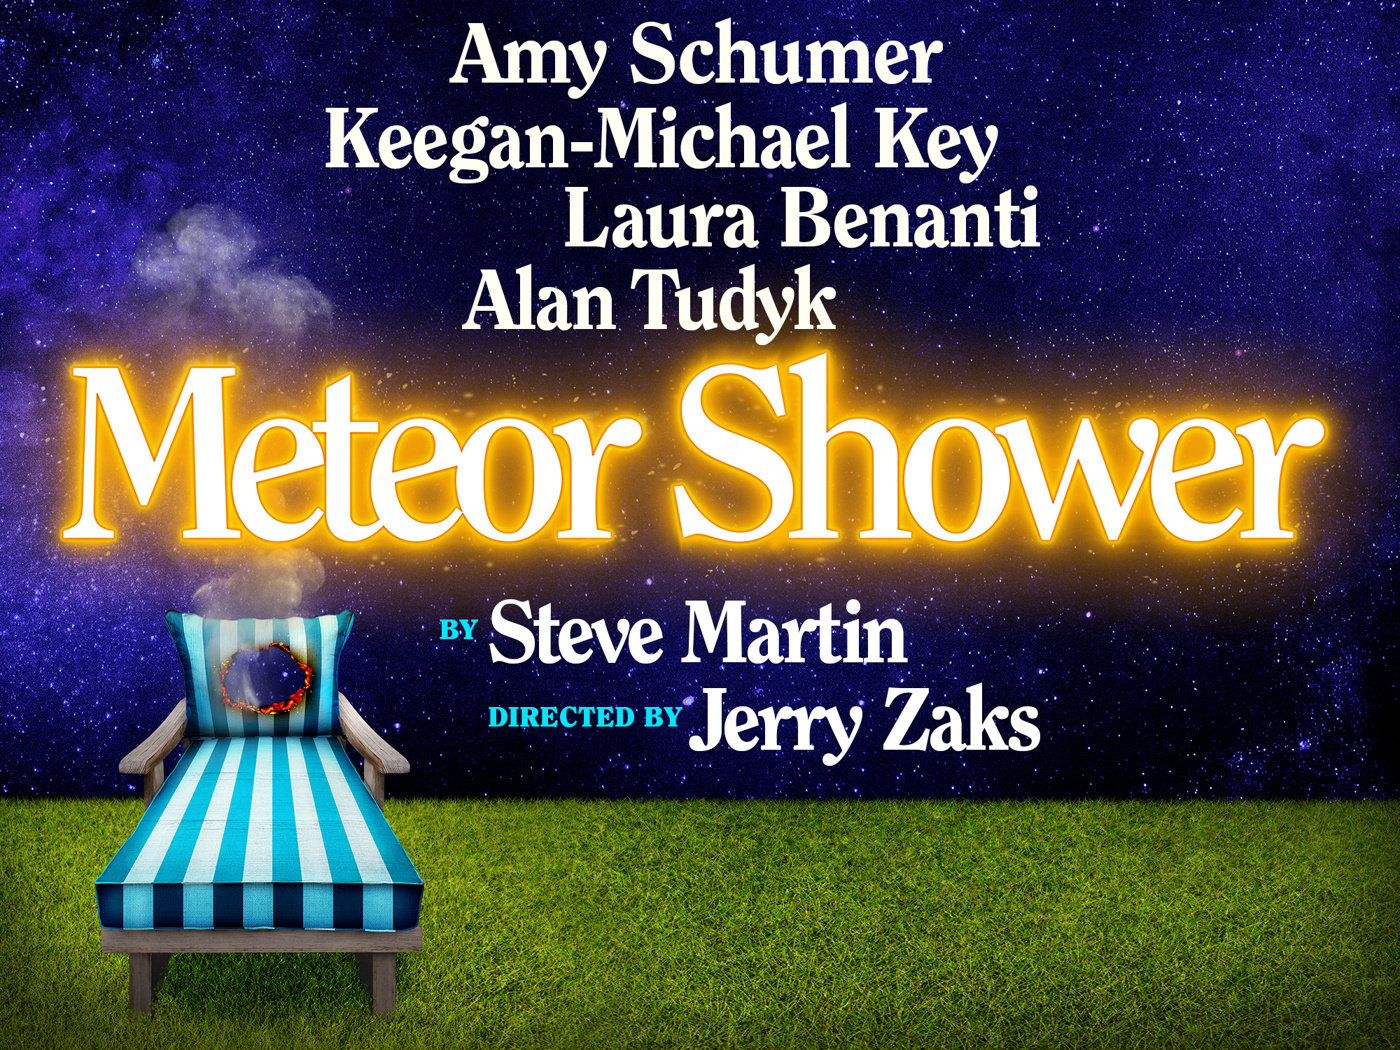 Broadway Welcomes Amy Schumer in Meteor Shower…